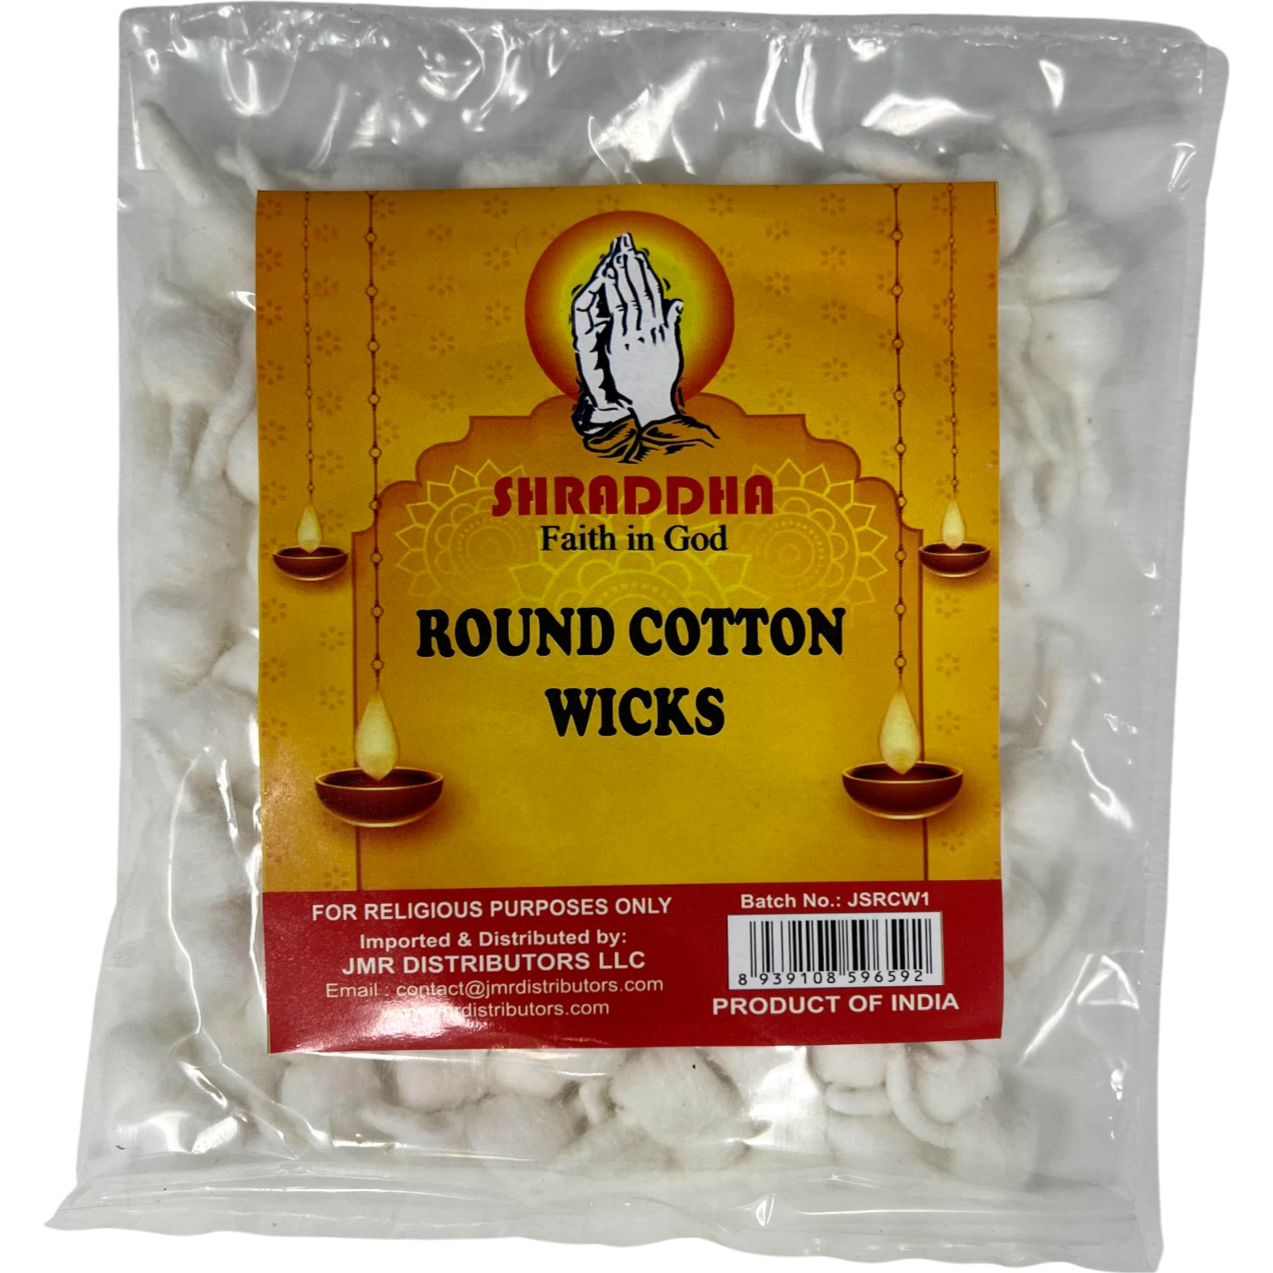 Shraddha Round Cotton Wicks Price - Buy Online at $2.29 in US